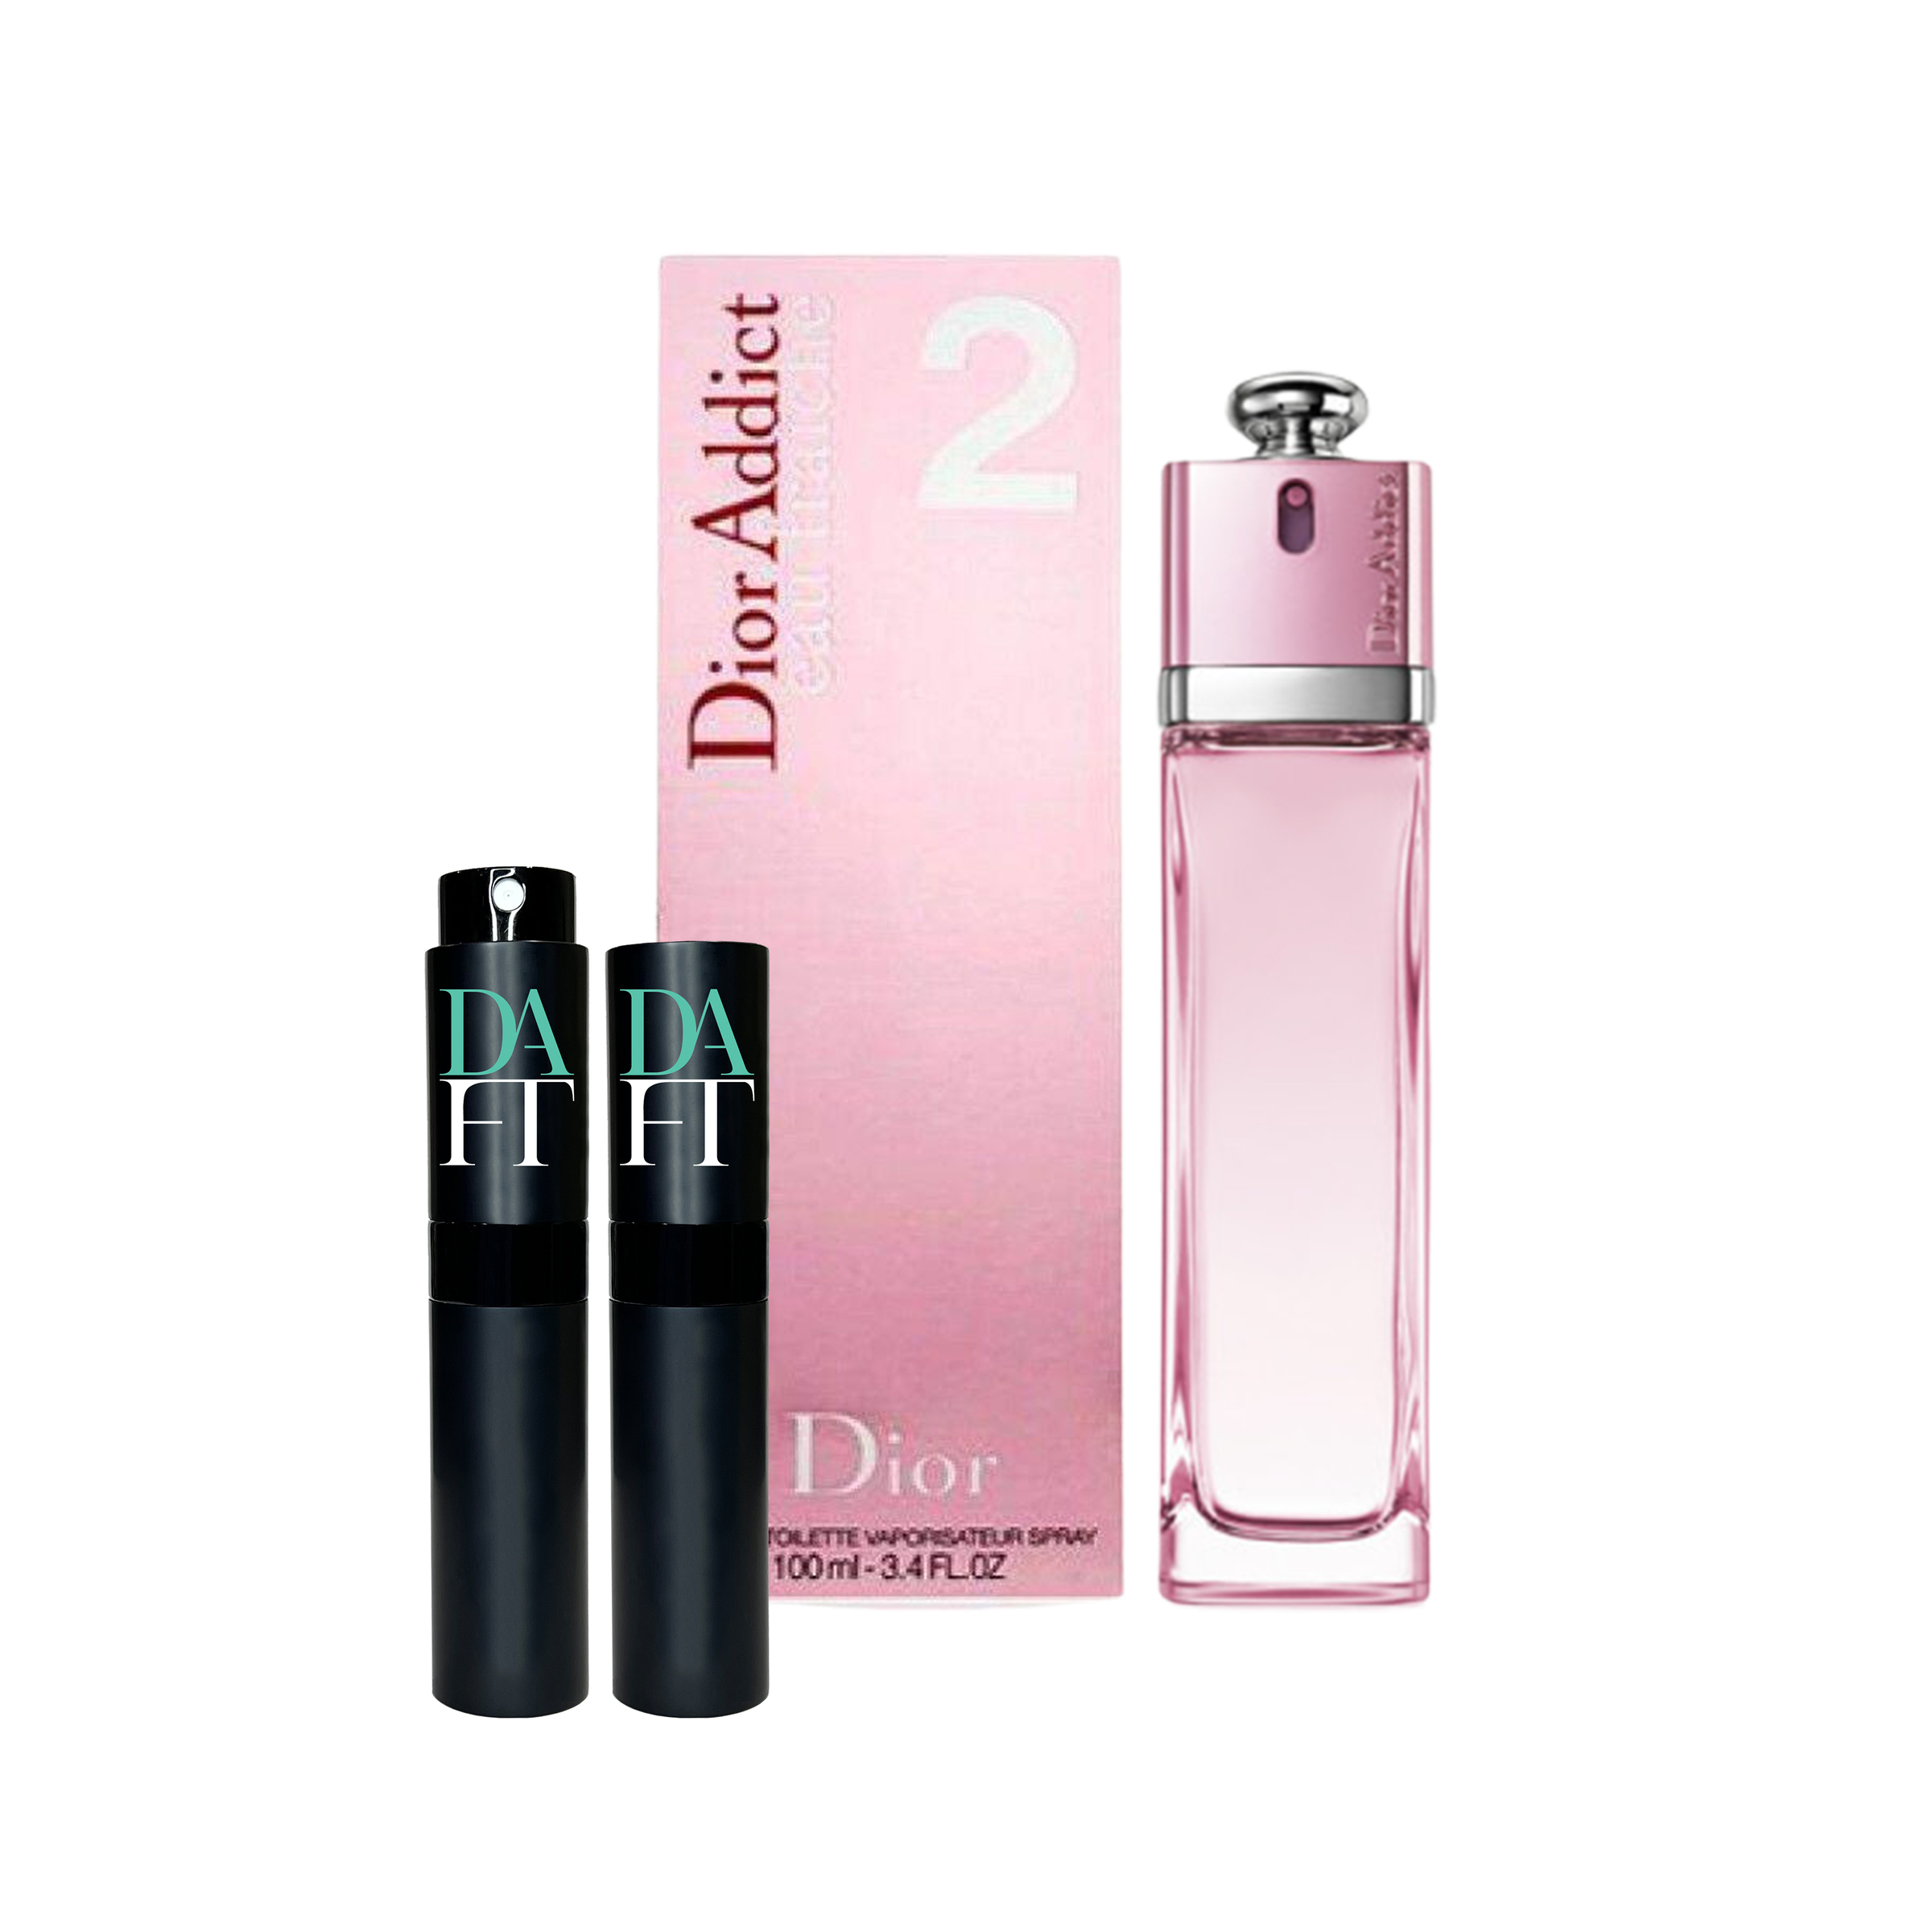 Dior - Dior Addict 2 – DAFT Perfume